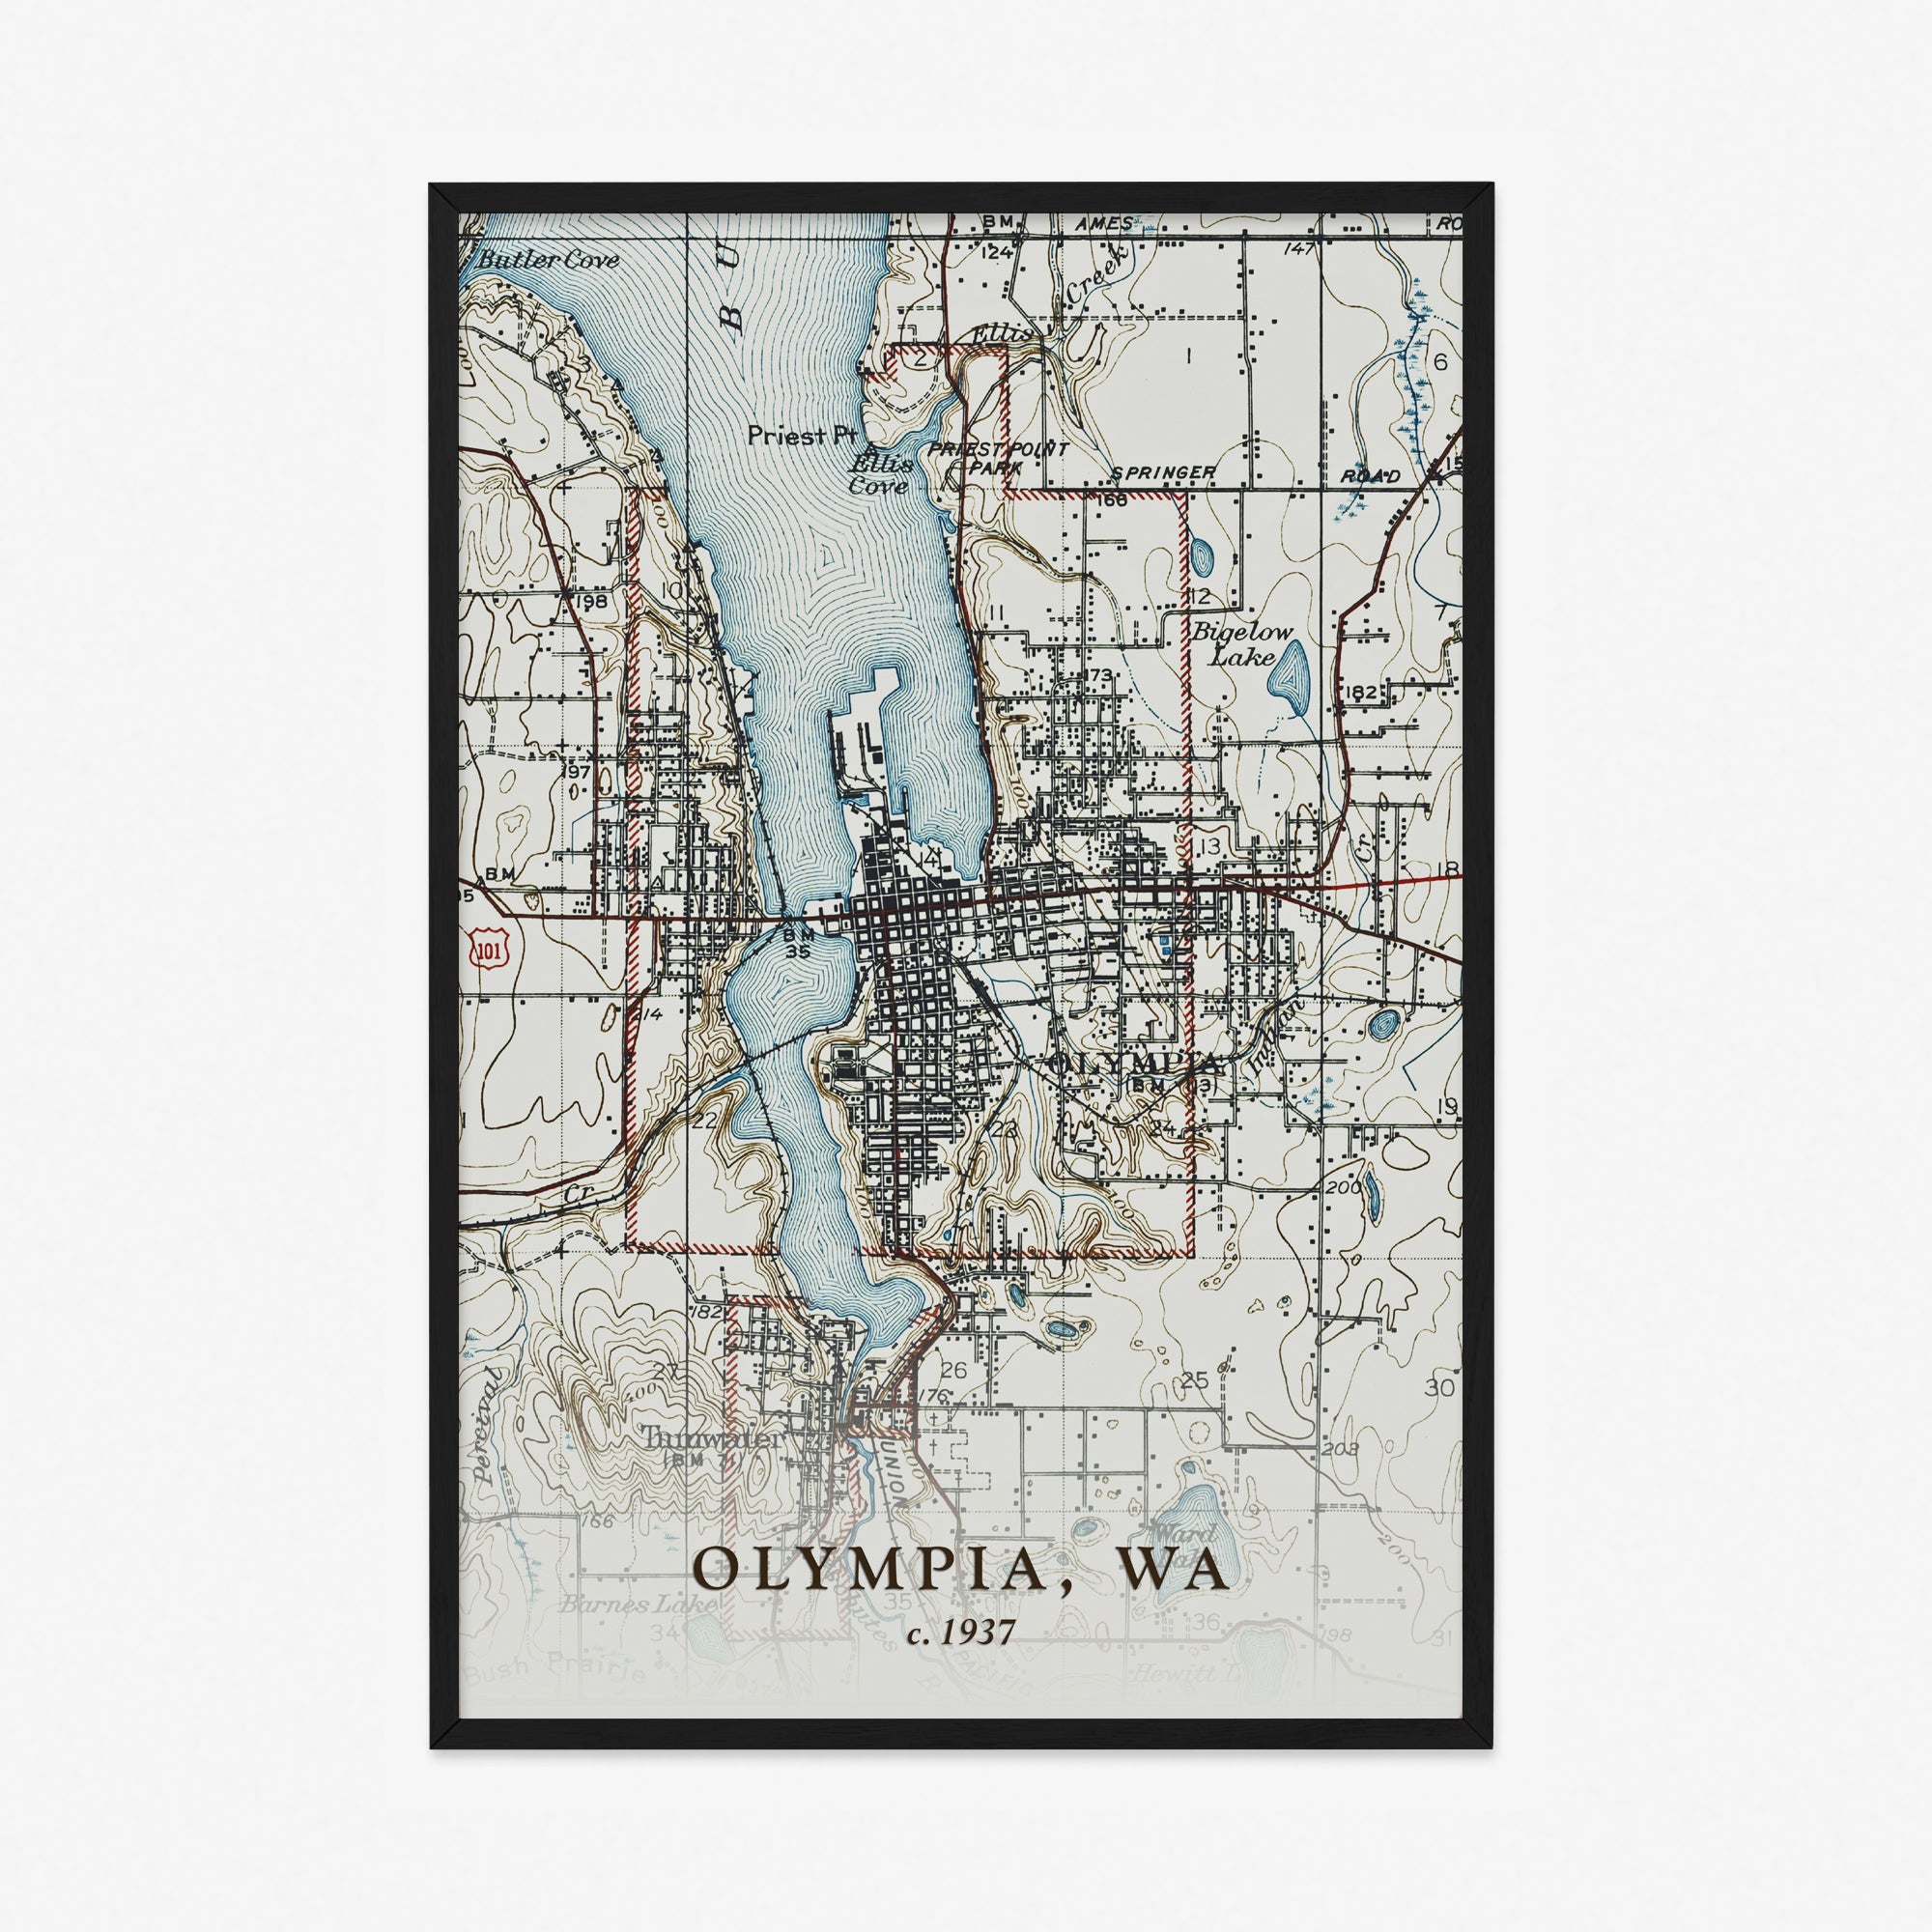 Olympia, WA - 1937 Topographic Map